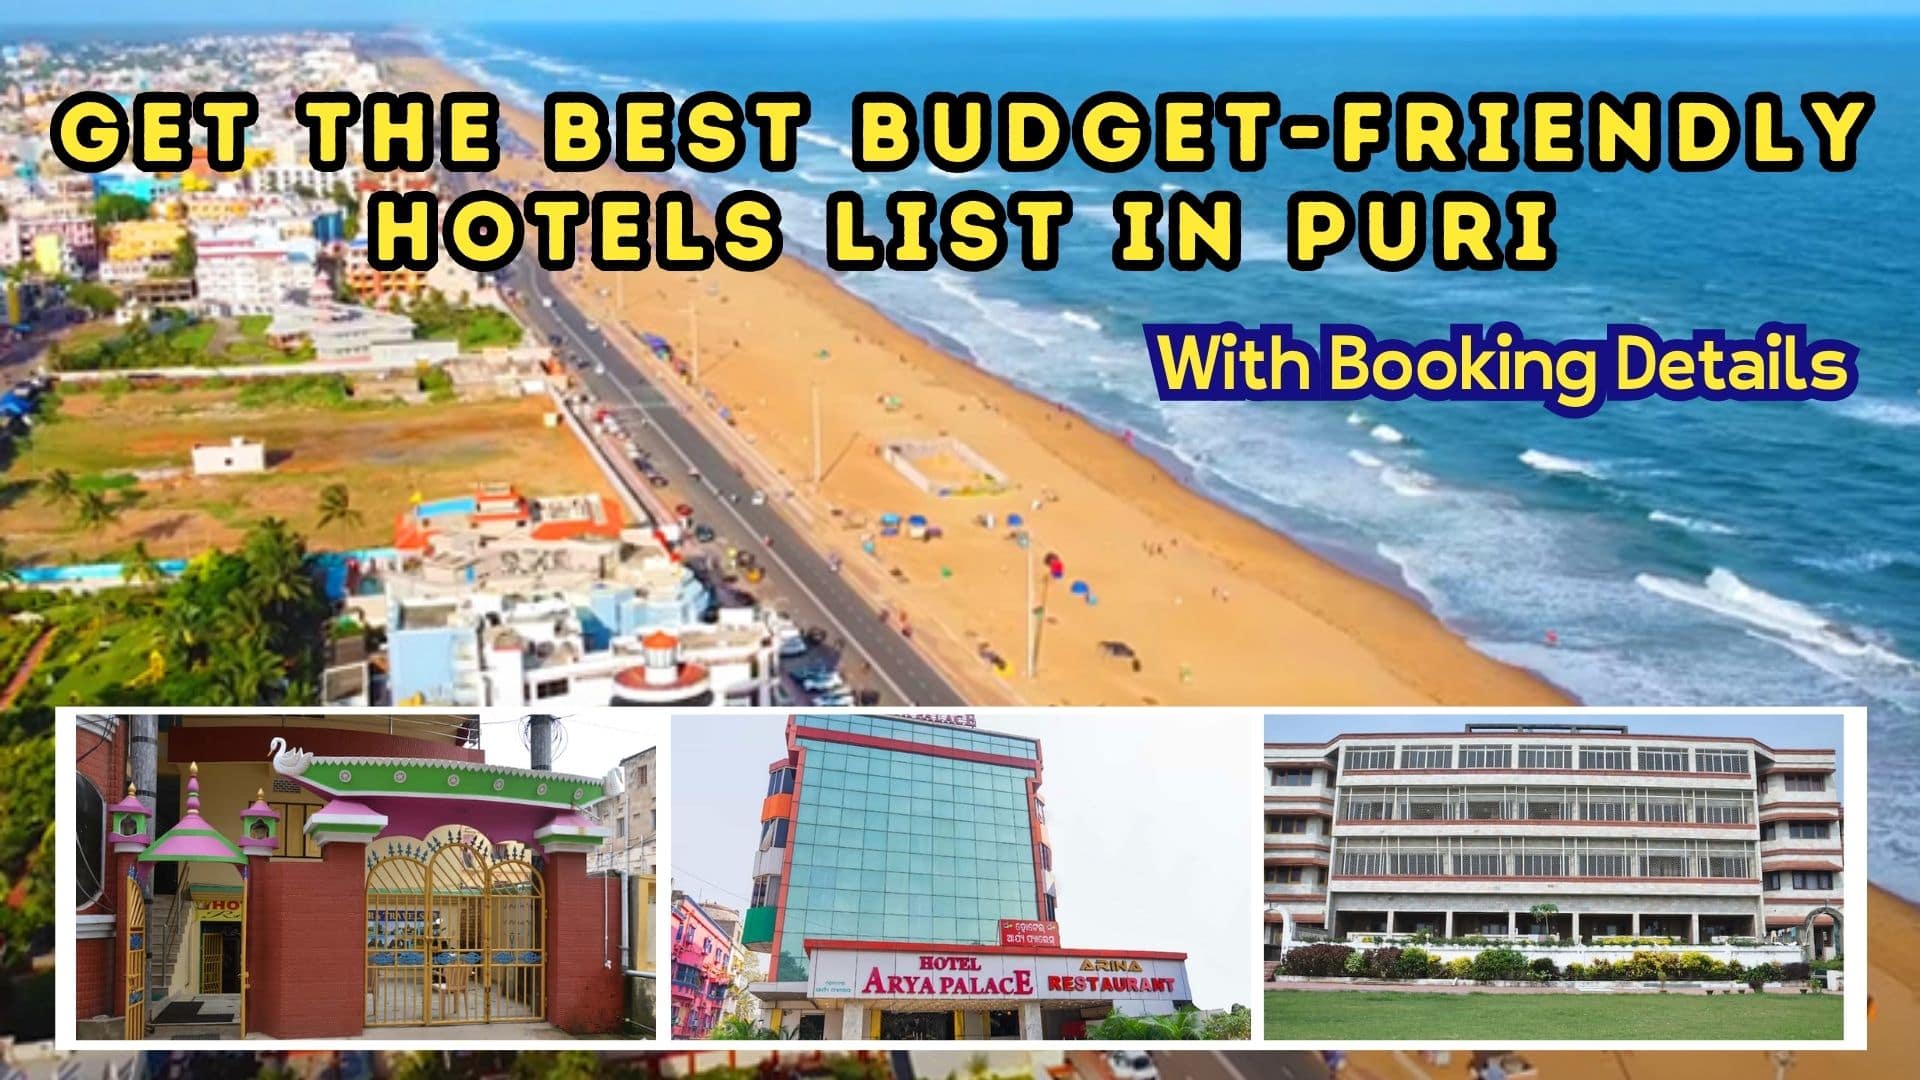 Puri hotels